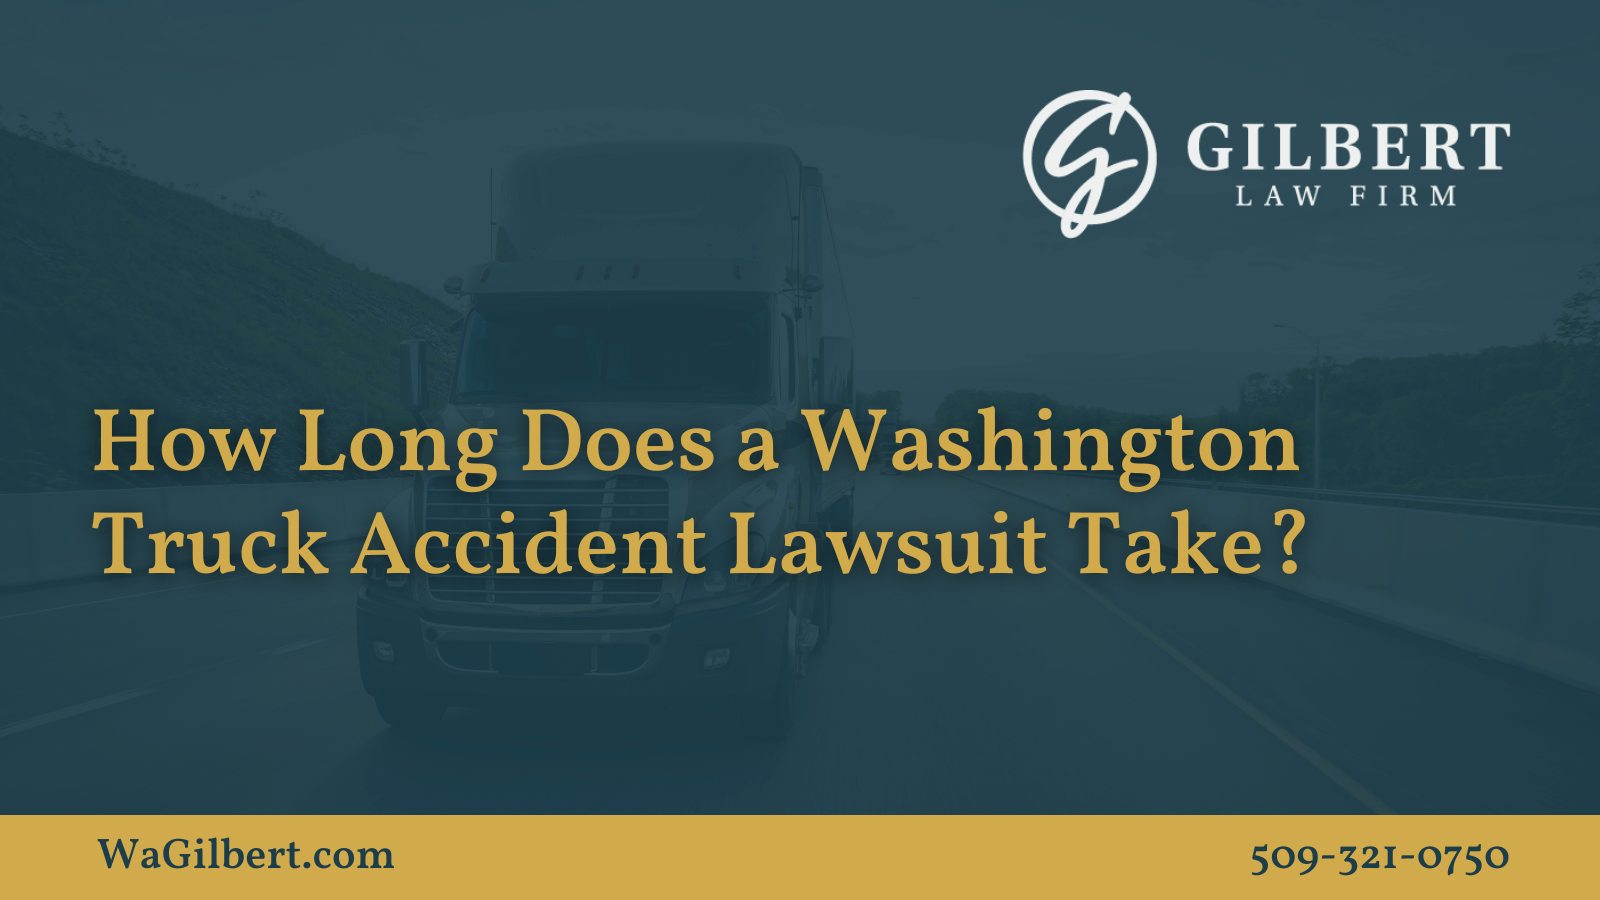 How Long Does a Washington Truck Accident Lawsuit Take? | Gilbert Law Firm Spokane Washington